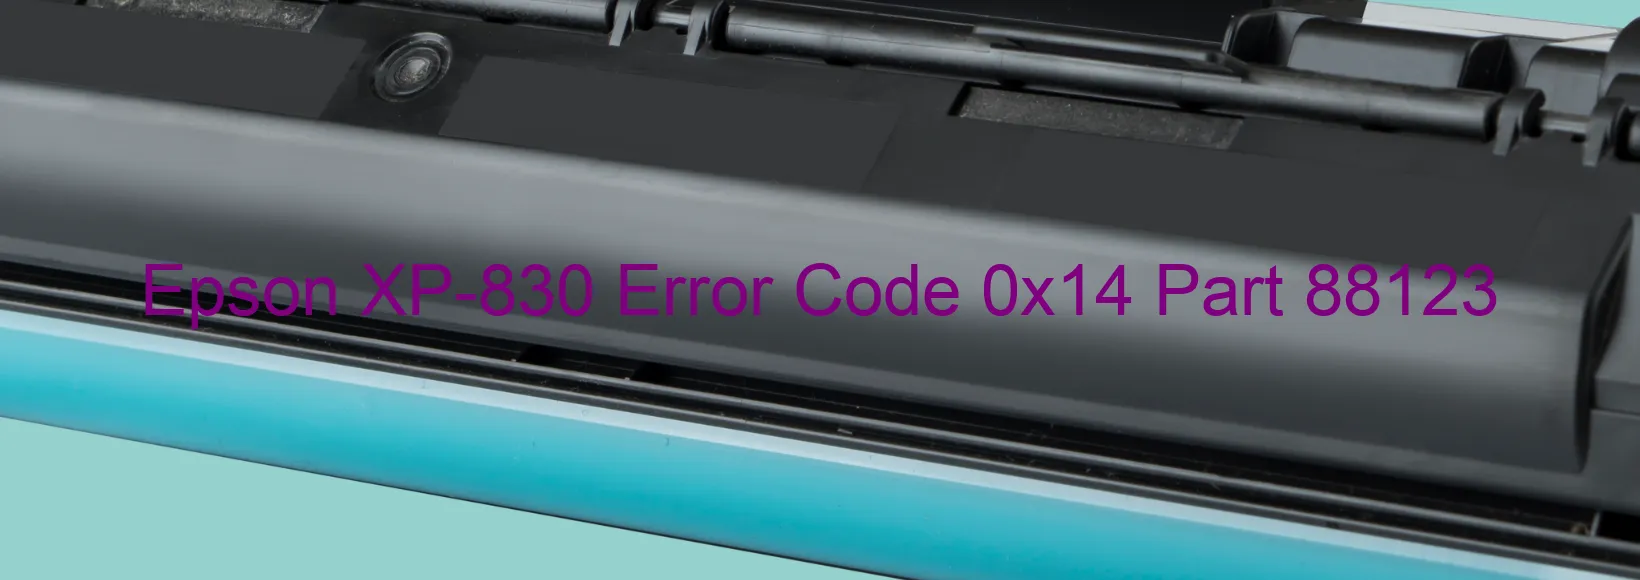 Epson XP-830 Error Code 0x14 Part 88123